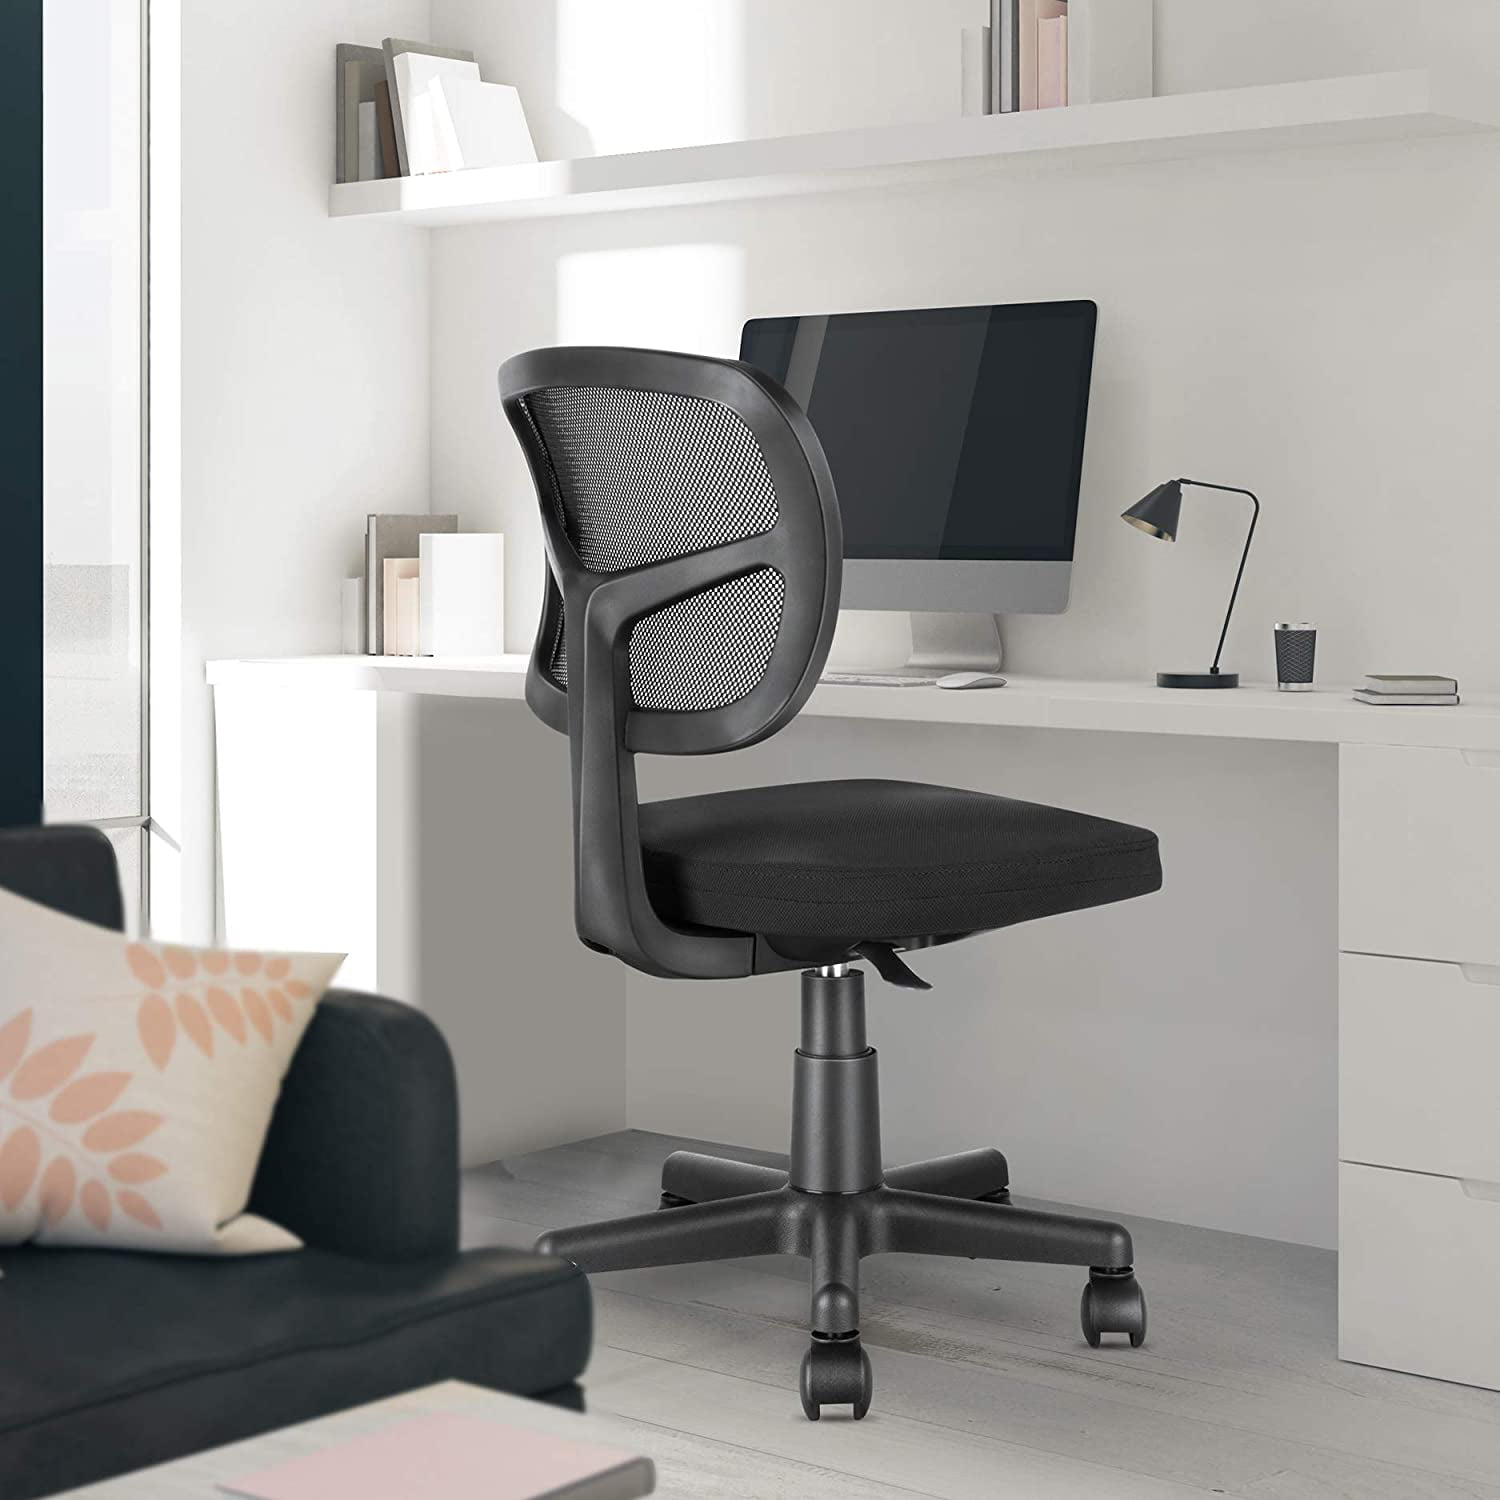 molents task chair armless office chair mesh computer chair for home office  desk mid back swivel desk chair ergonomic small chair  walmart